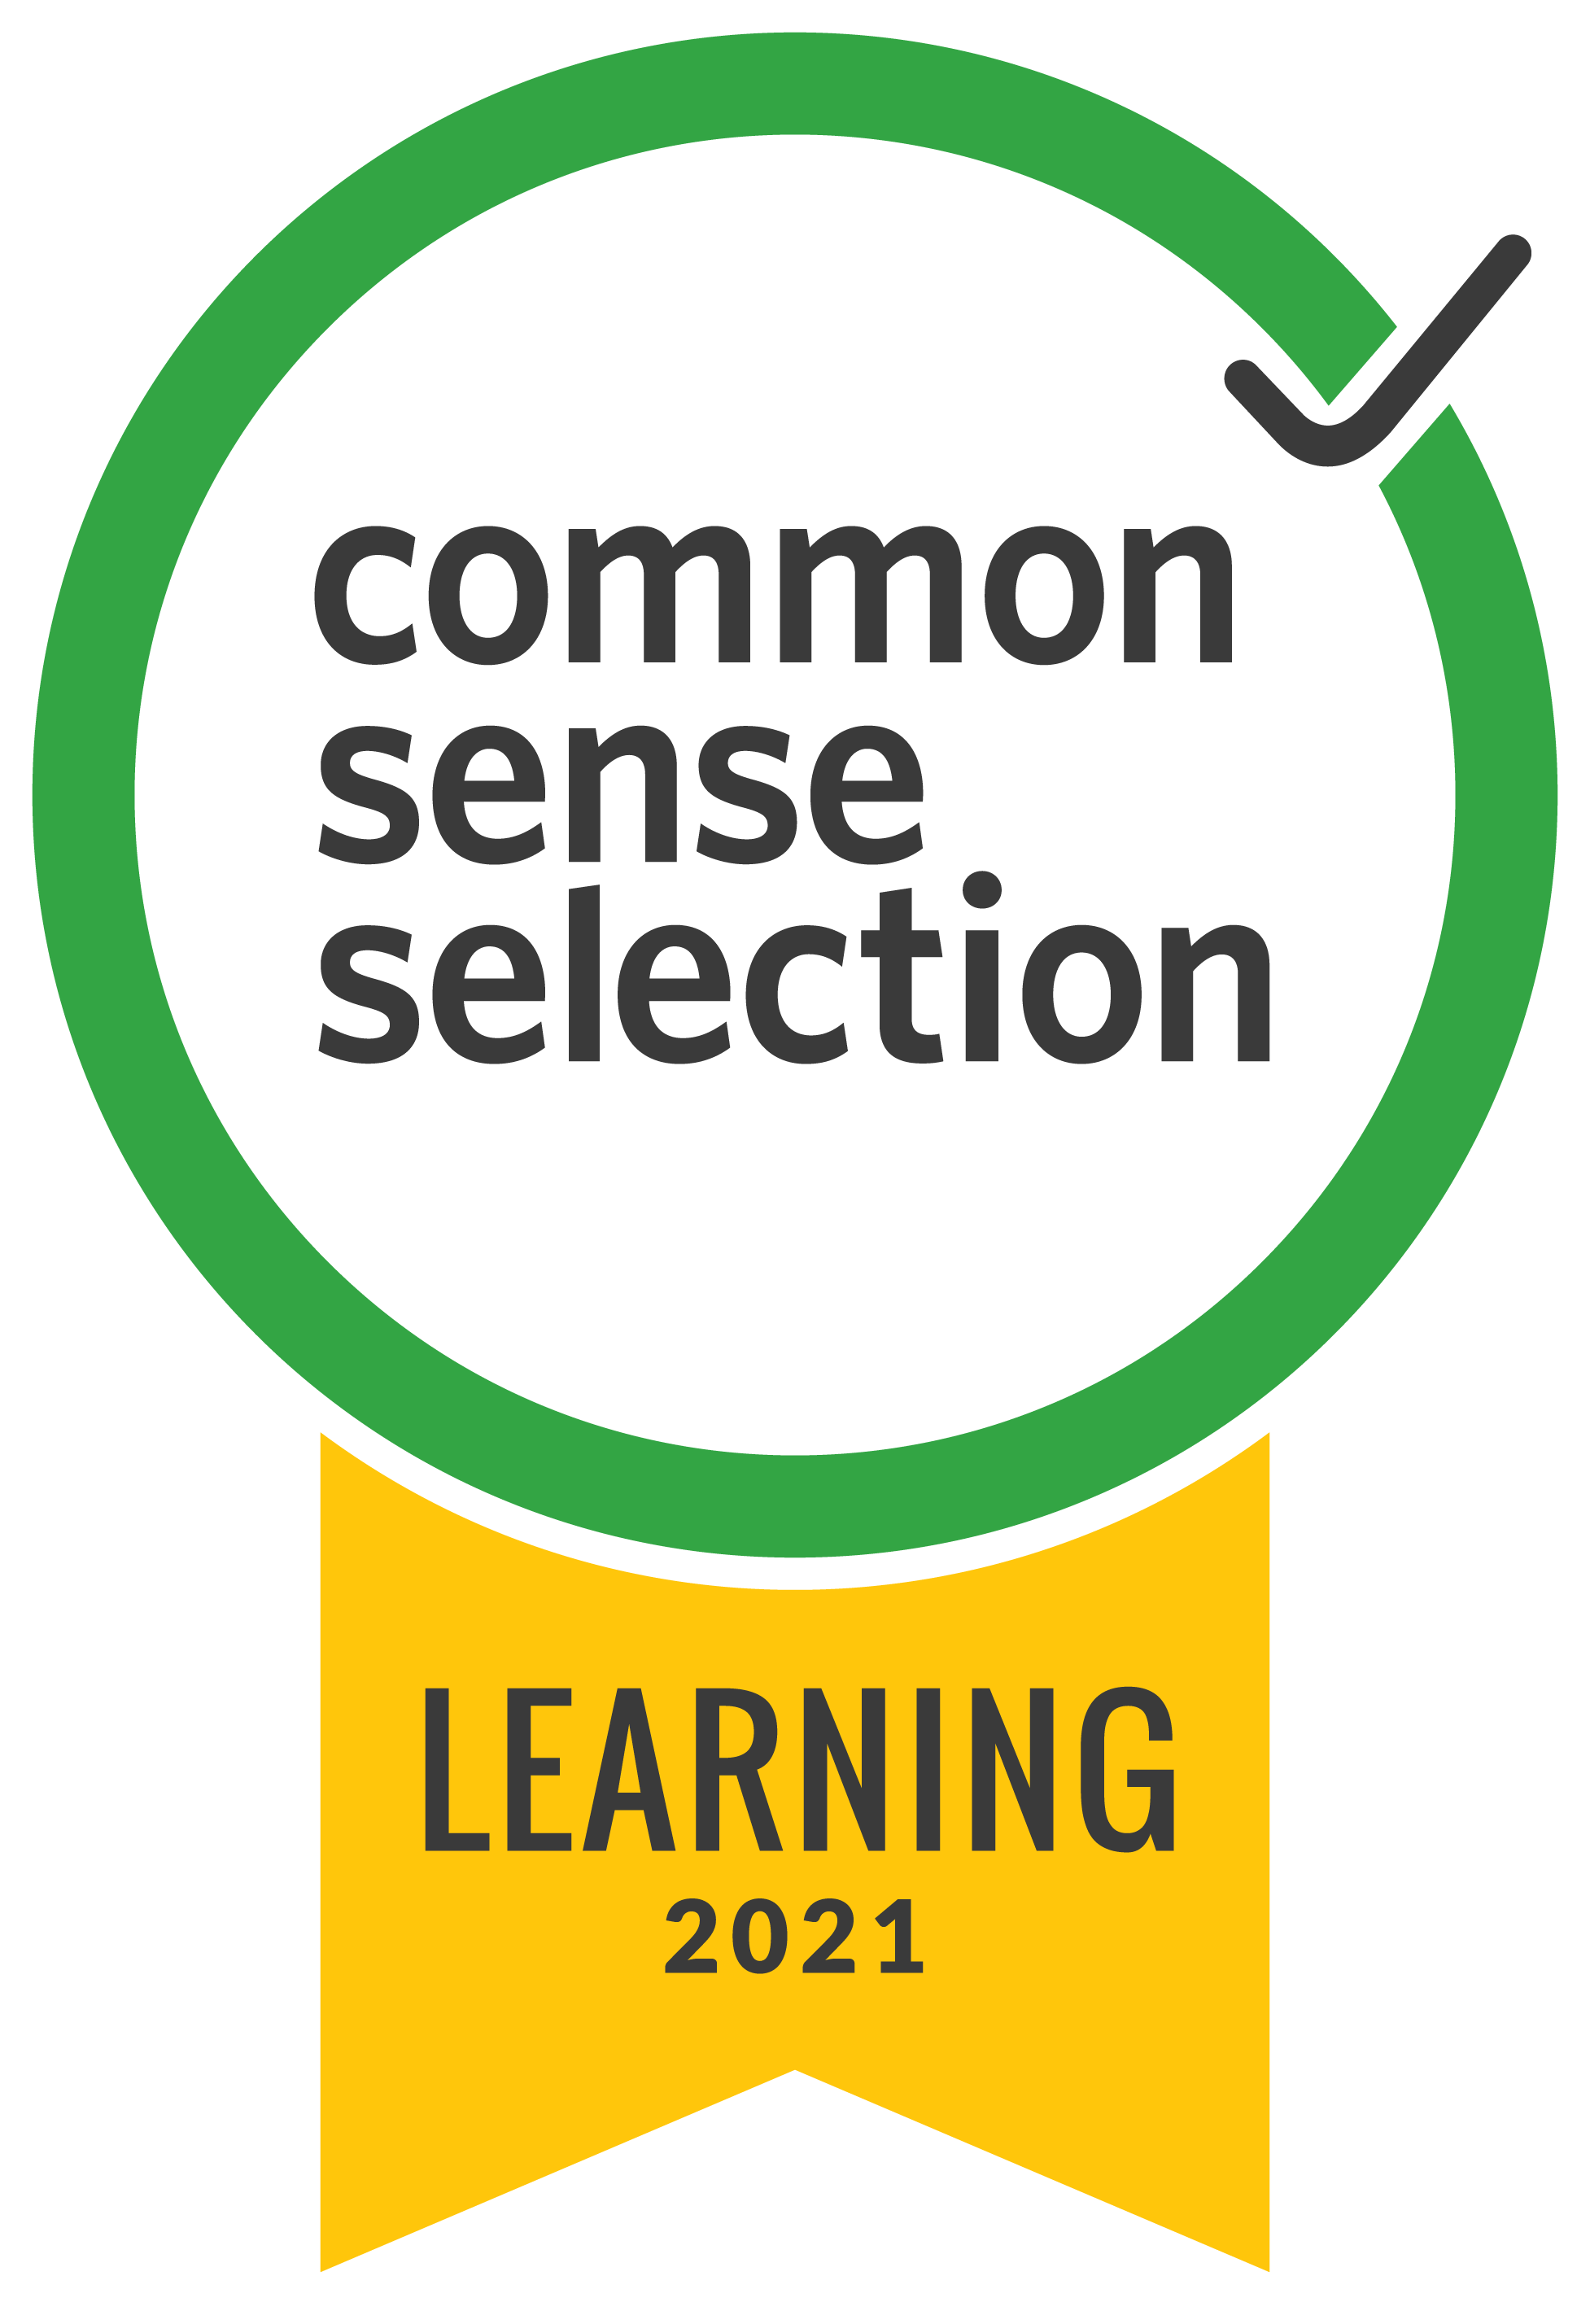 Common Sense Selection para el aprendizaje para 2021